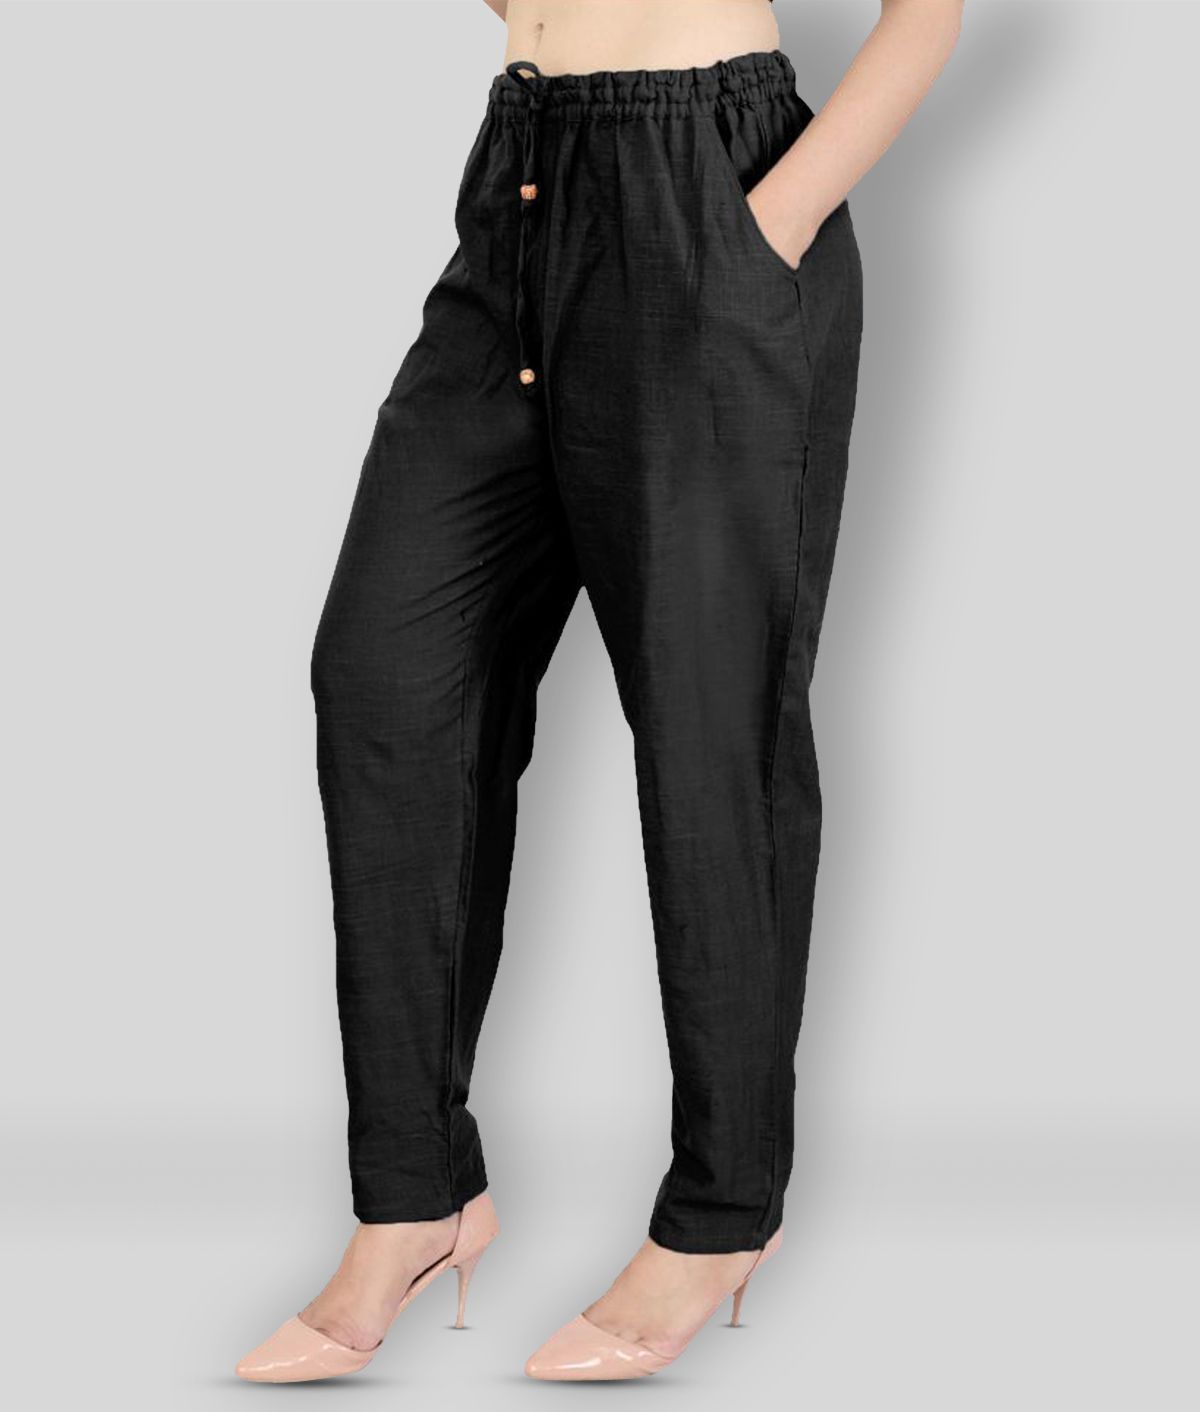 Lee Moda - Black Cotton Blend Slim Fit Women's Casual Pants  ( Pack of 1 )